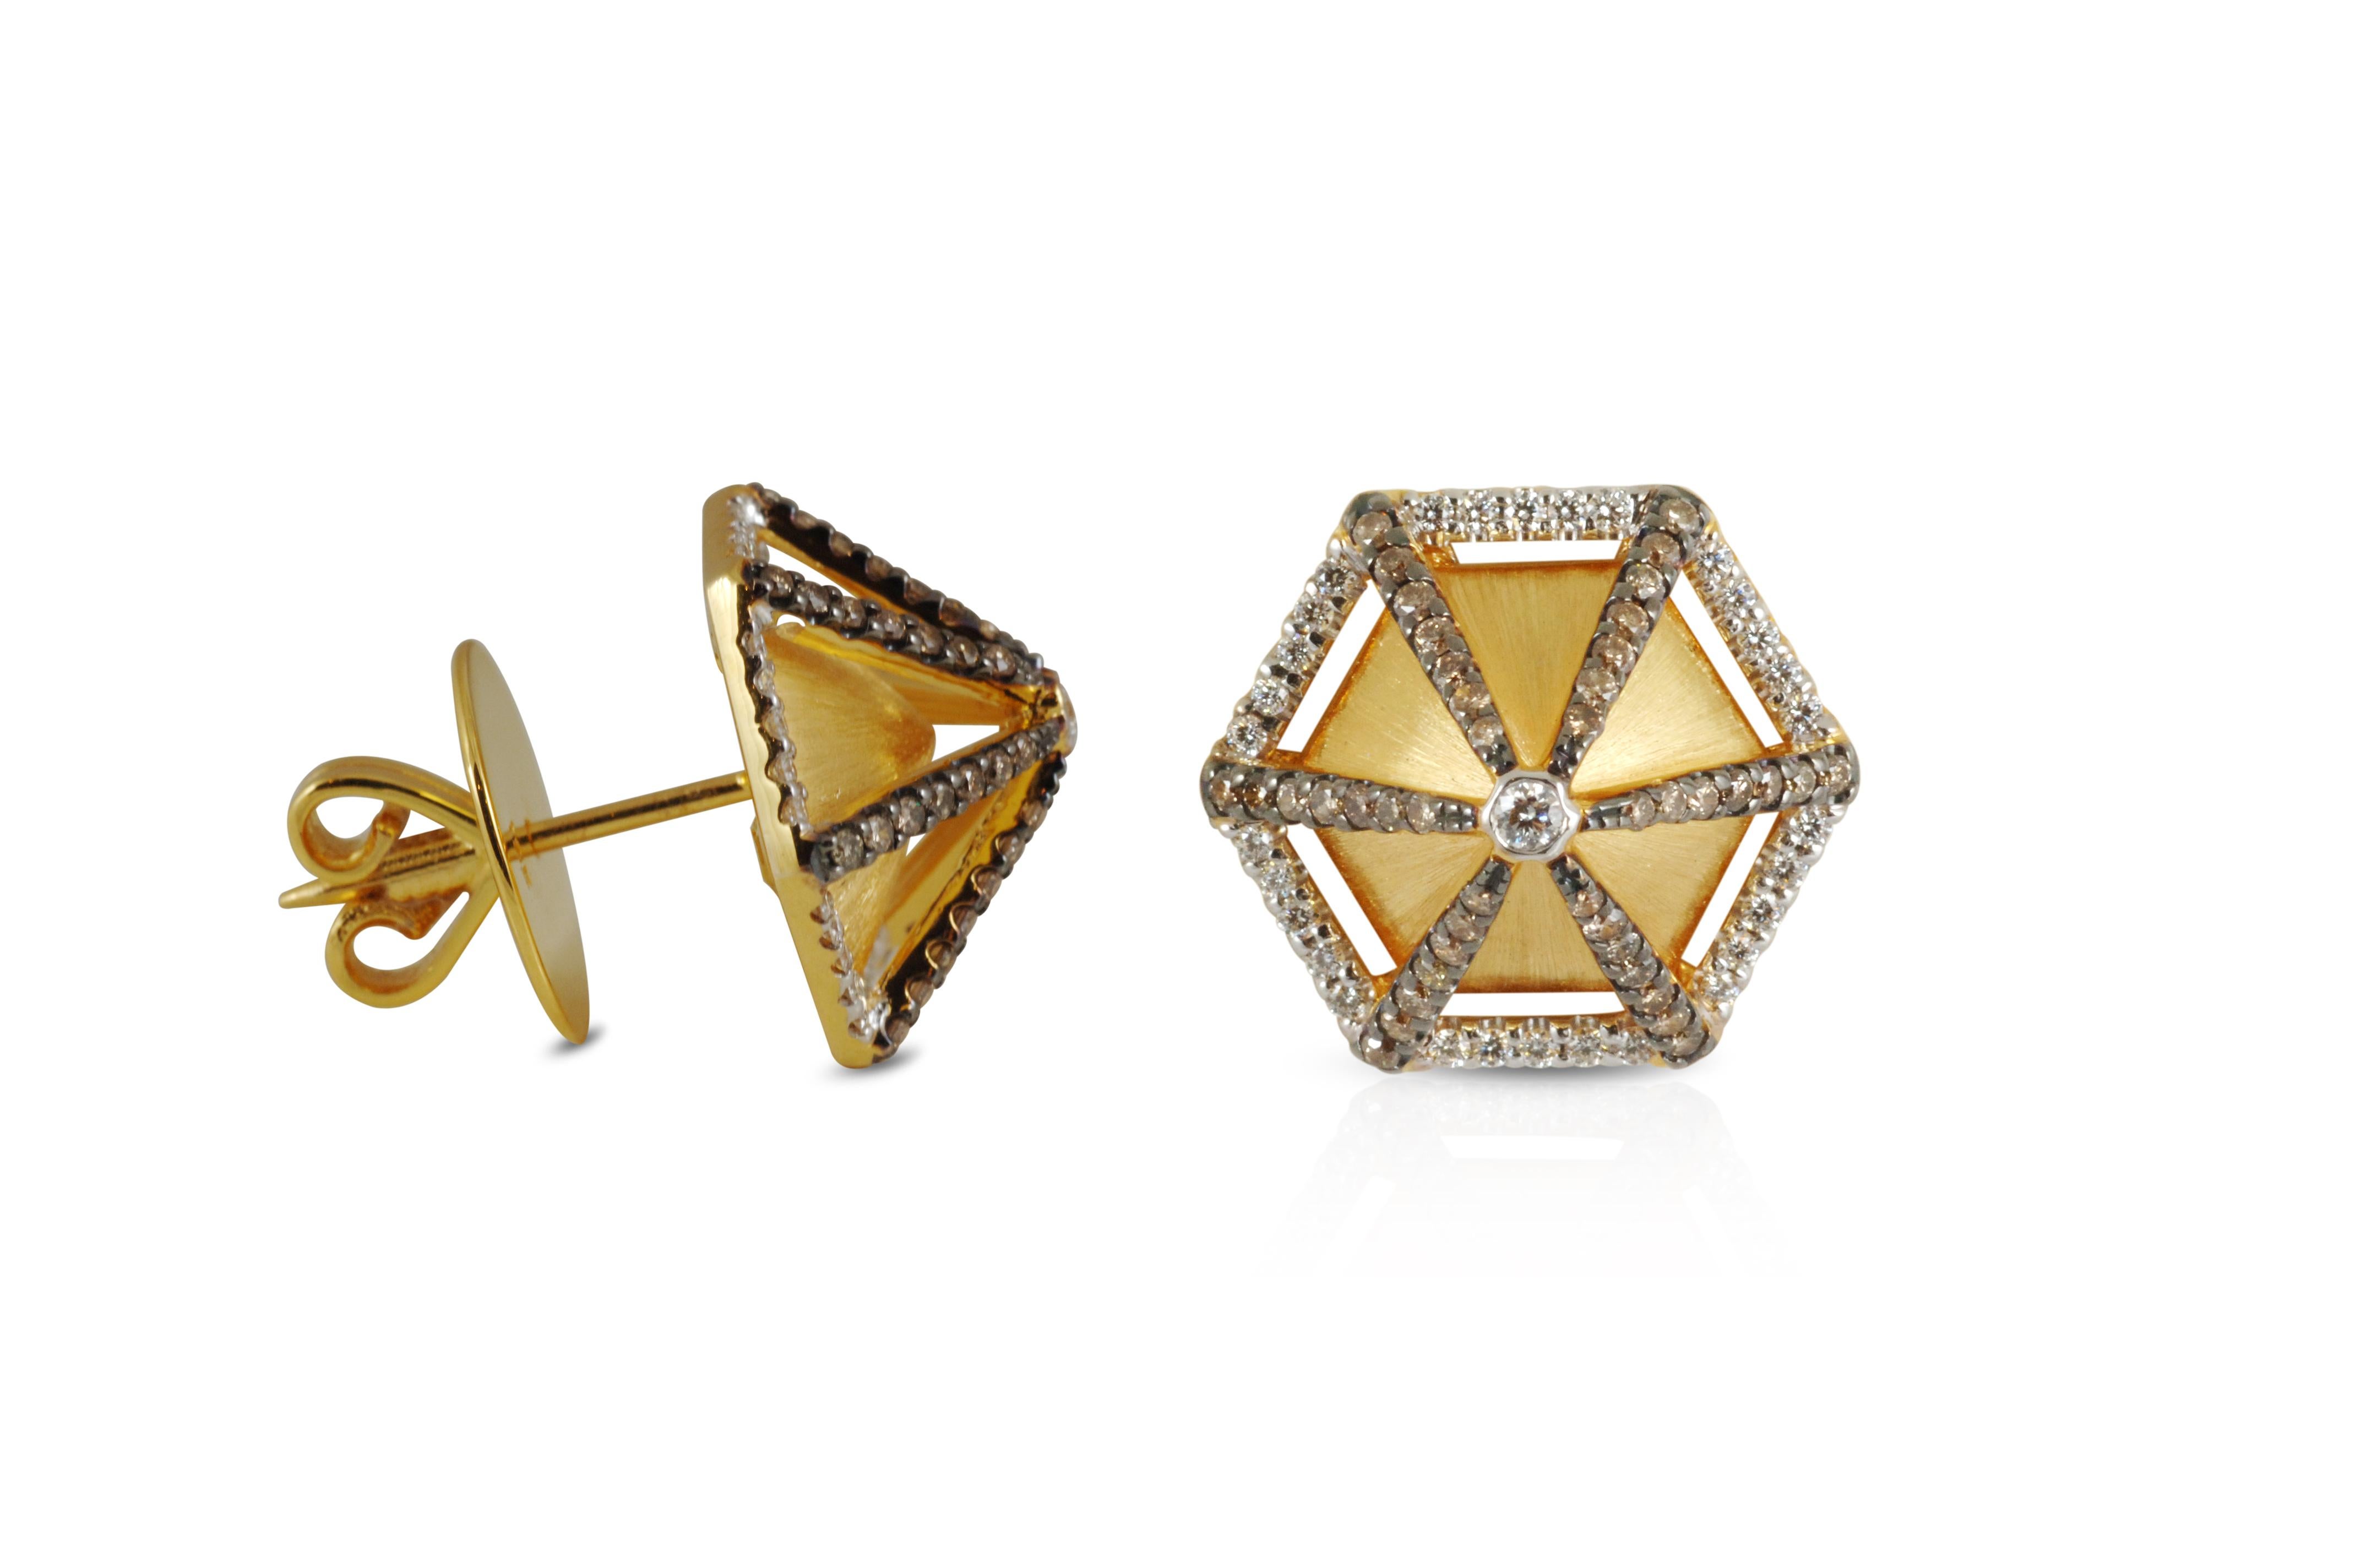 Brown Diamond 0.44 carat with Diamond 0.27 carat Earrings set in 18 Karat Gold Settings

Width:  1.6 cm 
Length:  1.6 cm
Total Weight: 10.65 grams

